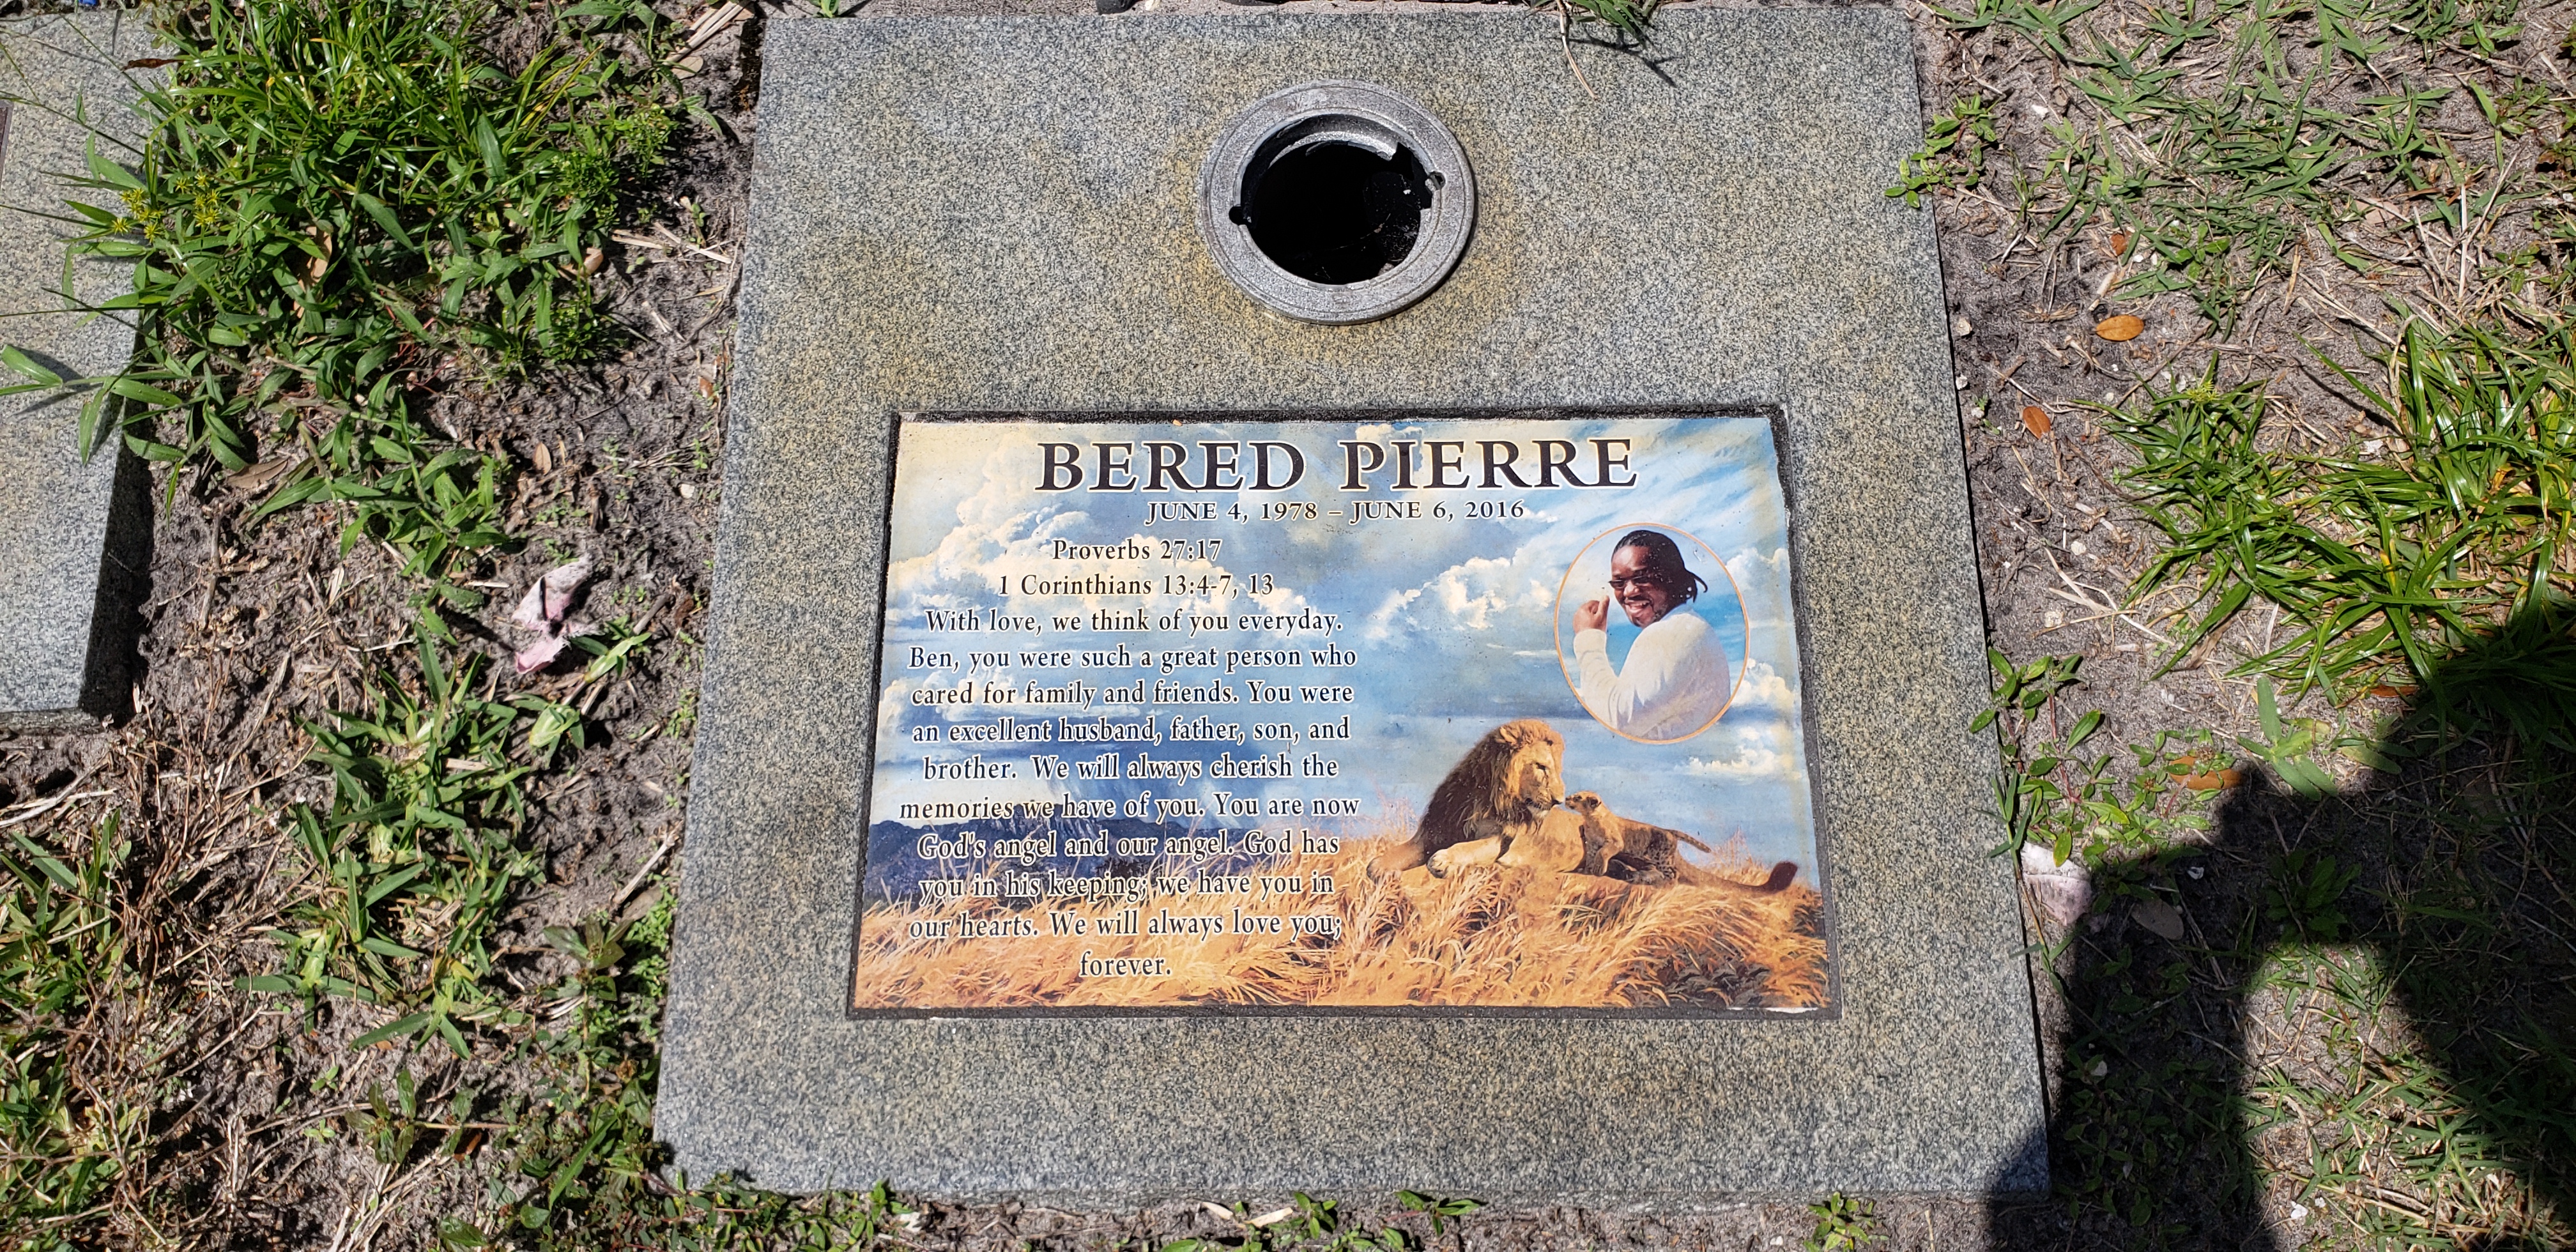 Bered Pierre